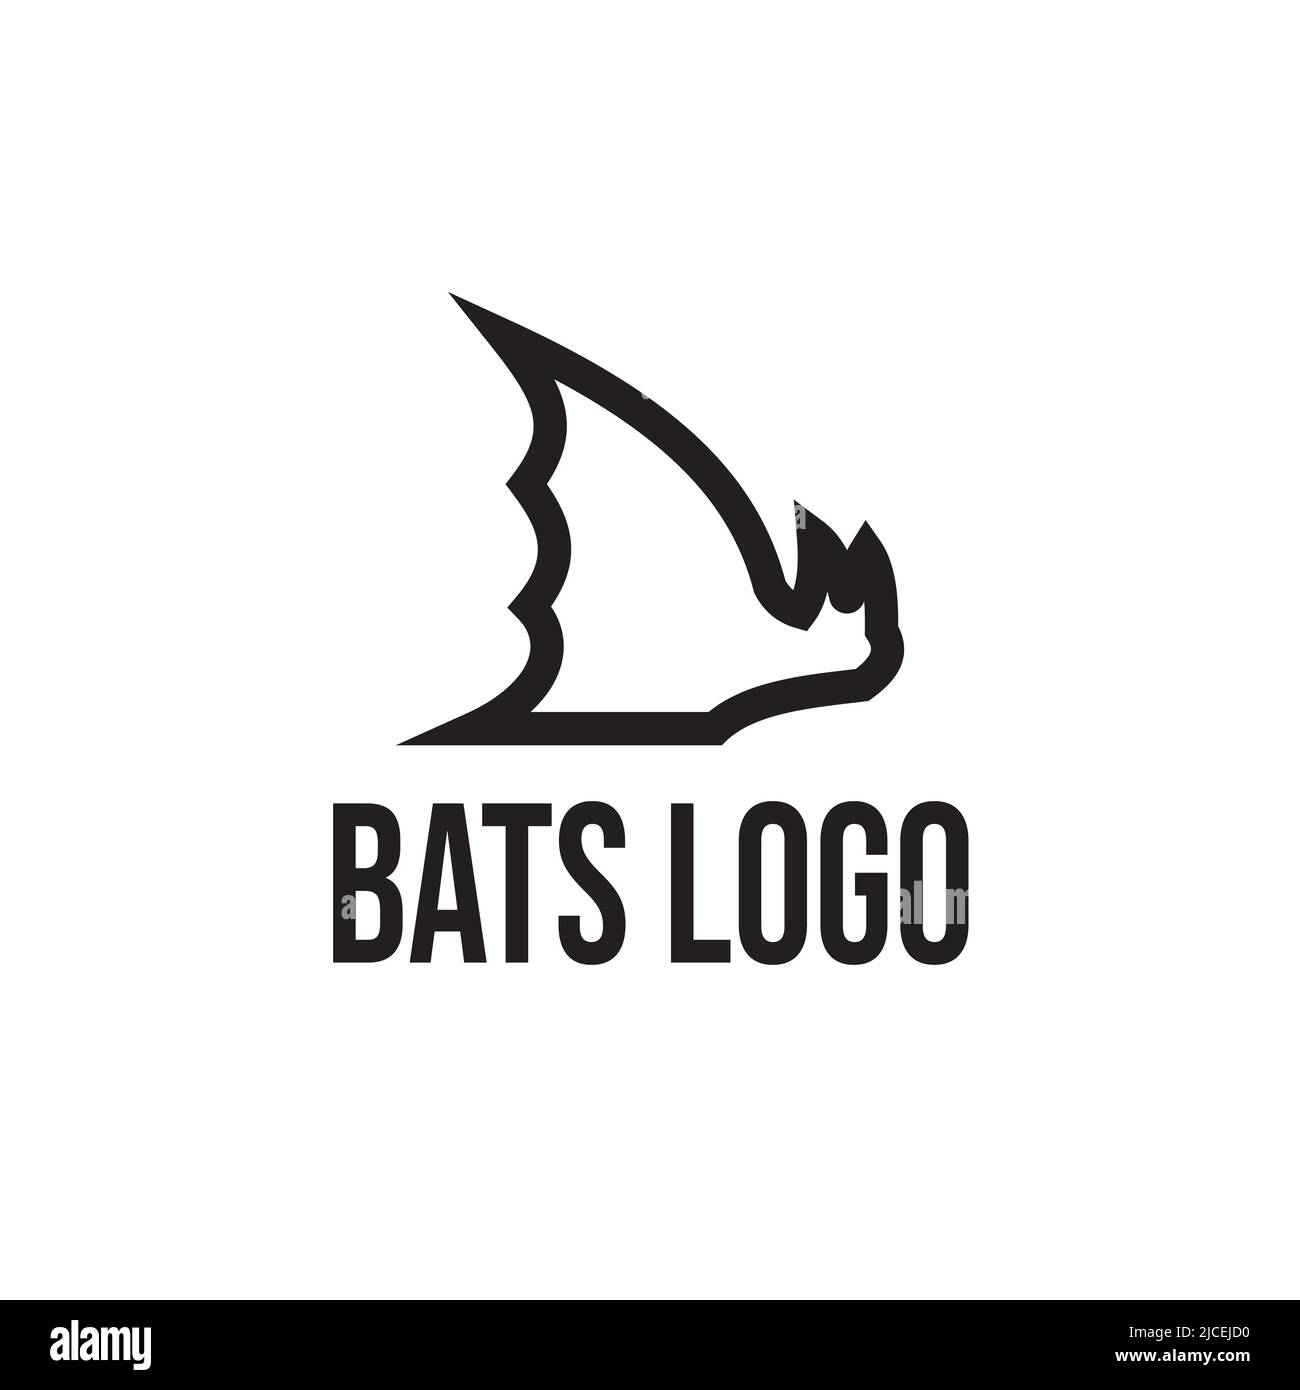 Batman Art Design Vektorvorlage: Stock-Vektorgrafik (Lizenzfrei